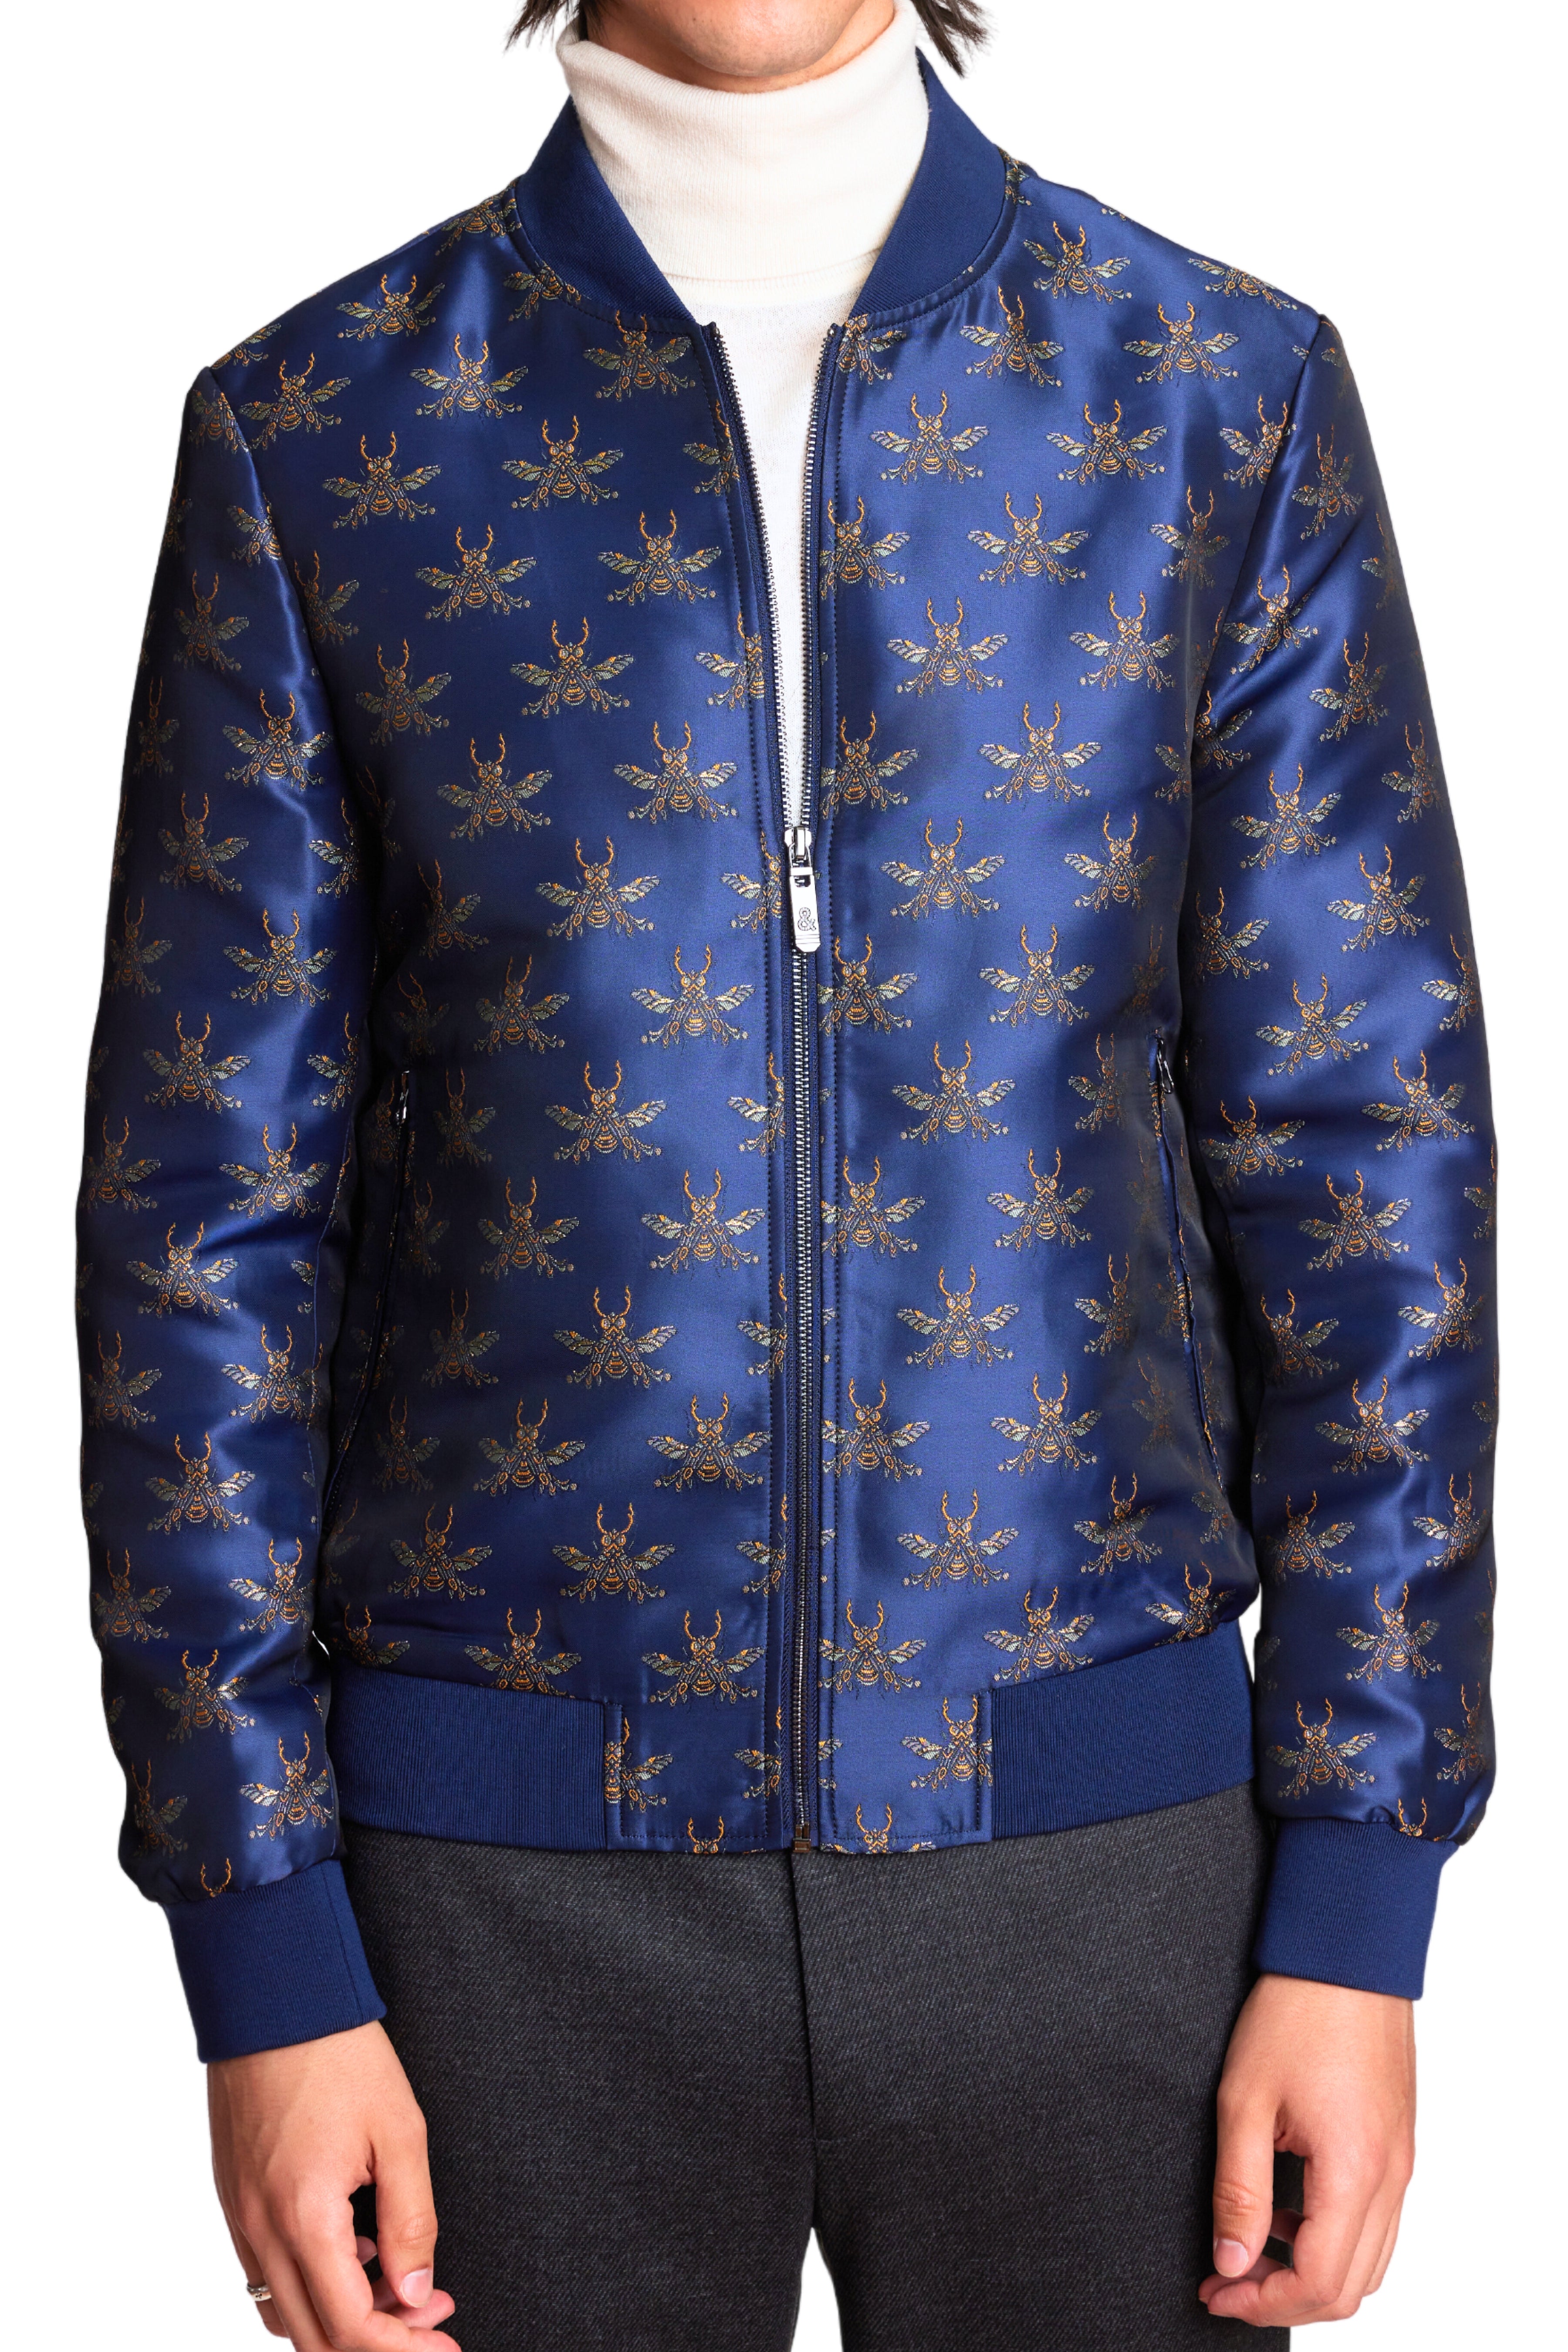 Louis Vuitton Navy Sleeve Monogram Bomber Jacket